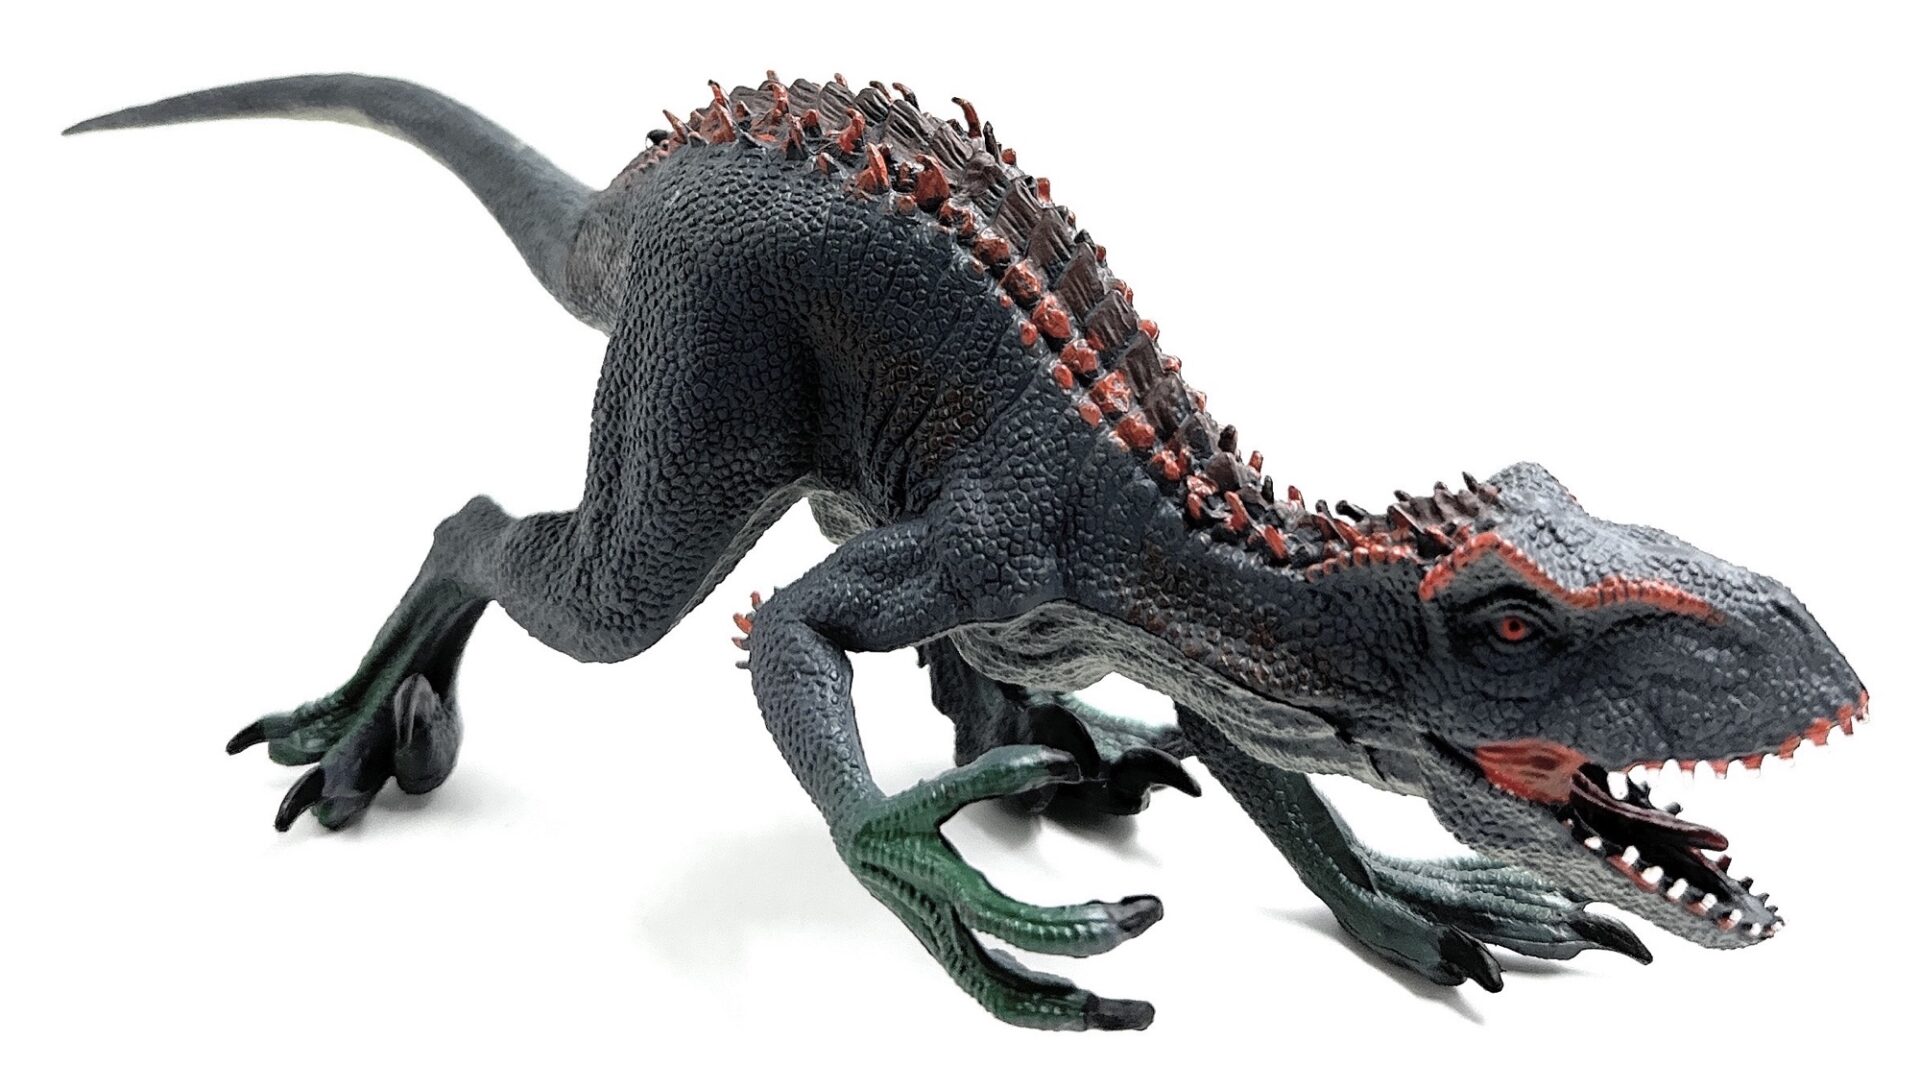 Dinosaur Toy Dinosaur Action Figure Kids Toys Realistic Model Large Size –  28 X 10 Cm - Raptor